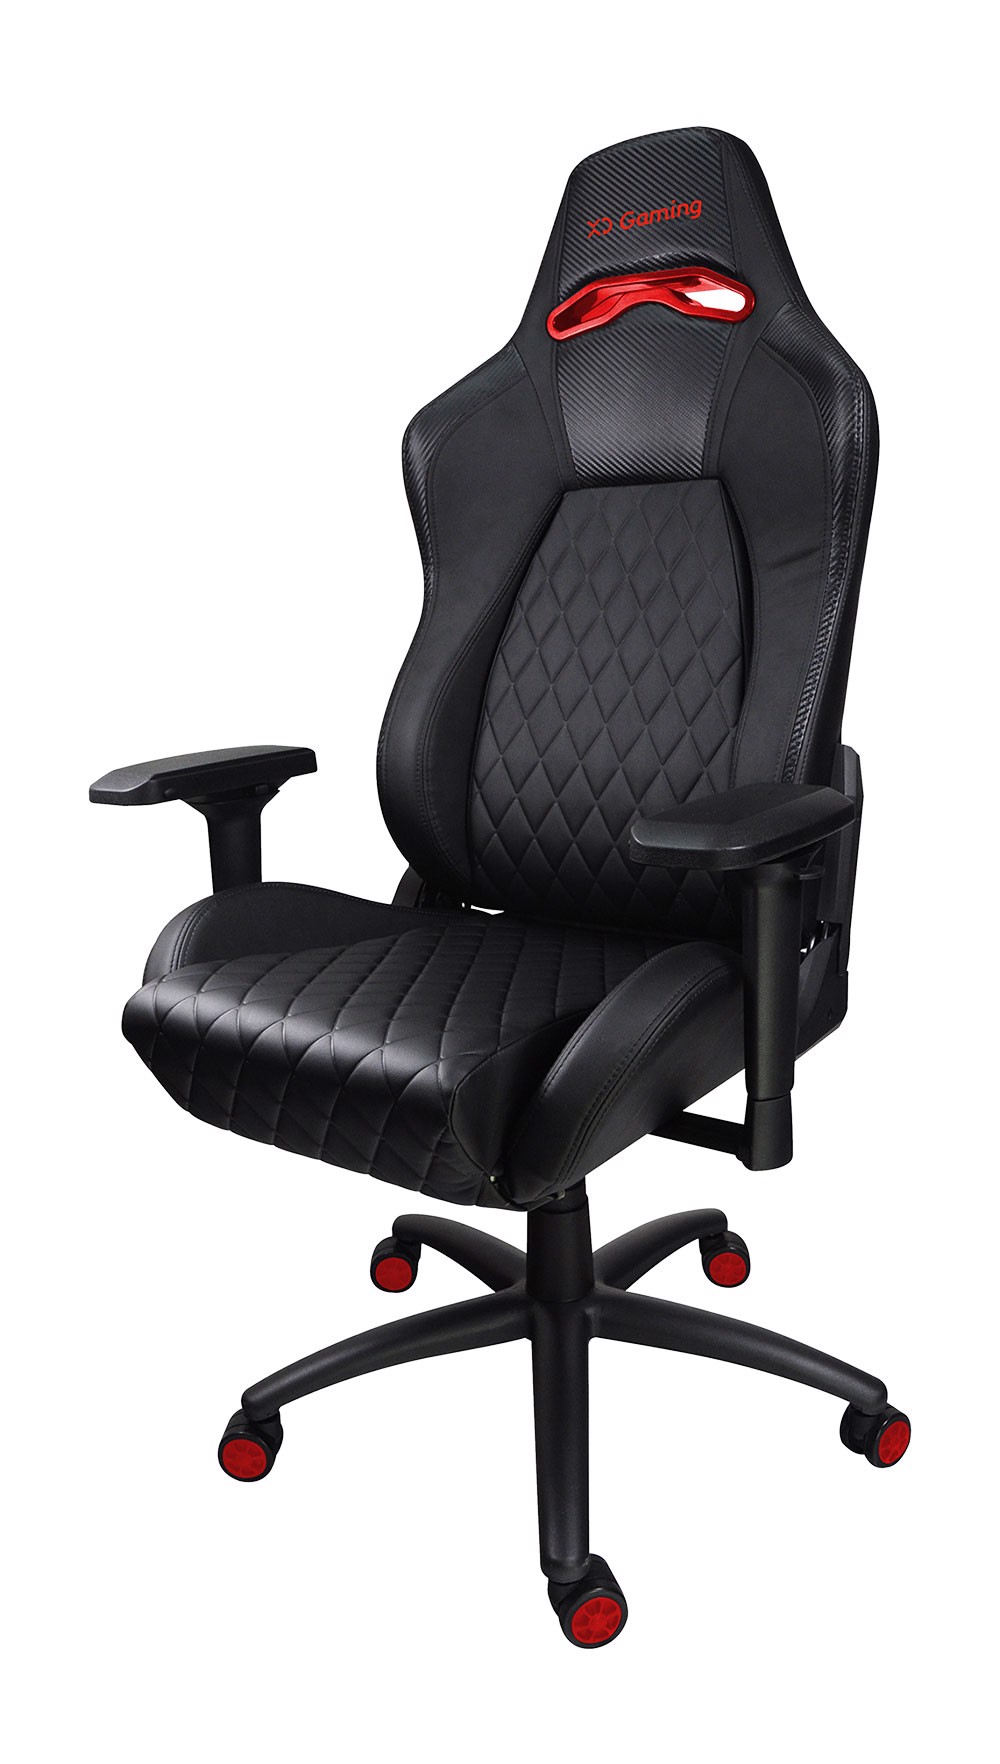 XD Enjoy XD Pro-Gamer Chair - Sedia Gamer Pro